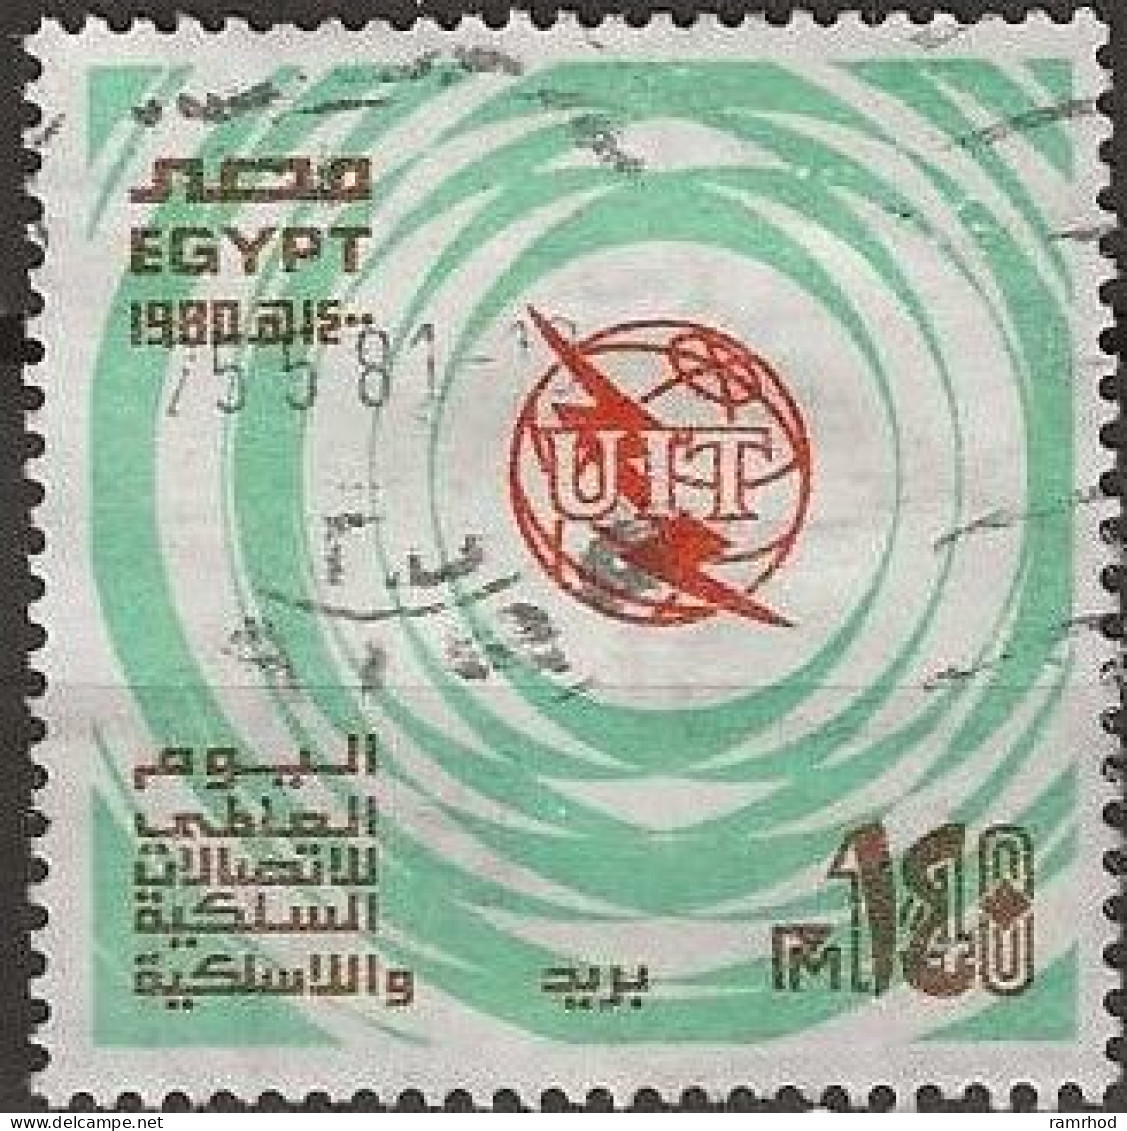 EGYPT 1980 United Nations Day - 140m. ITU Emblem (International Tele-communications Day) FU - Usados